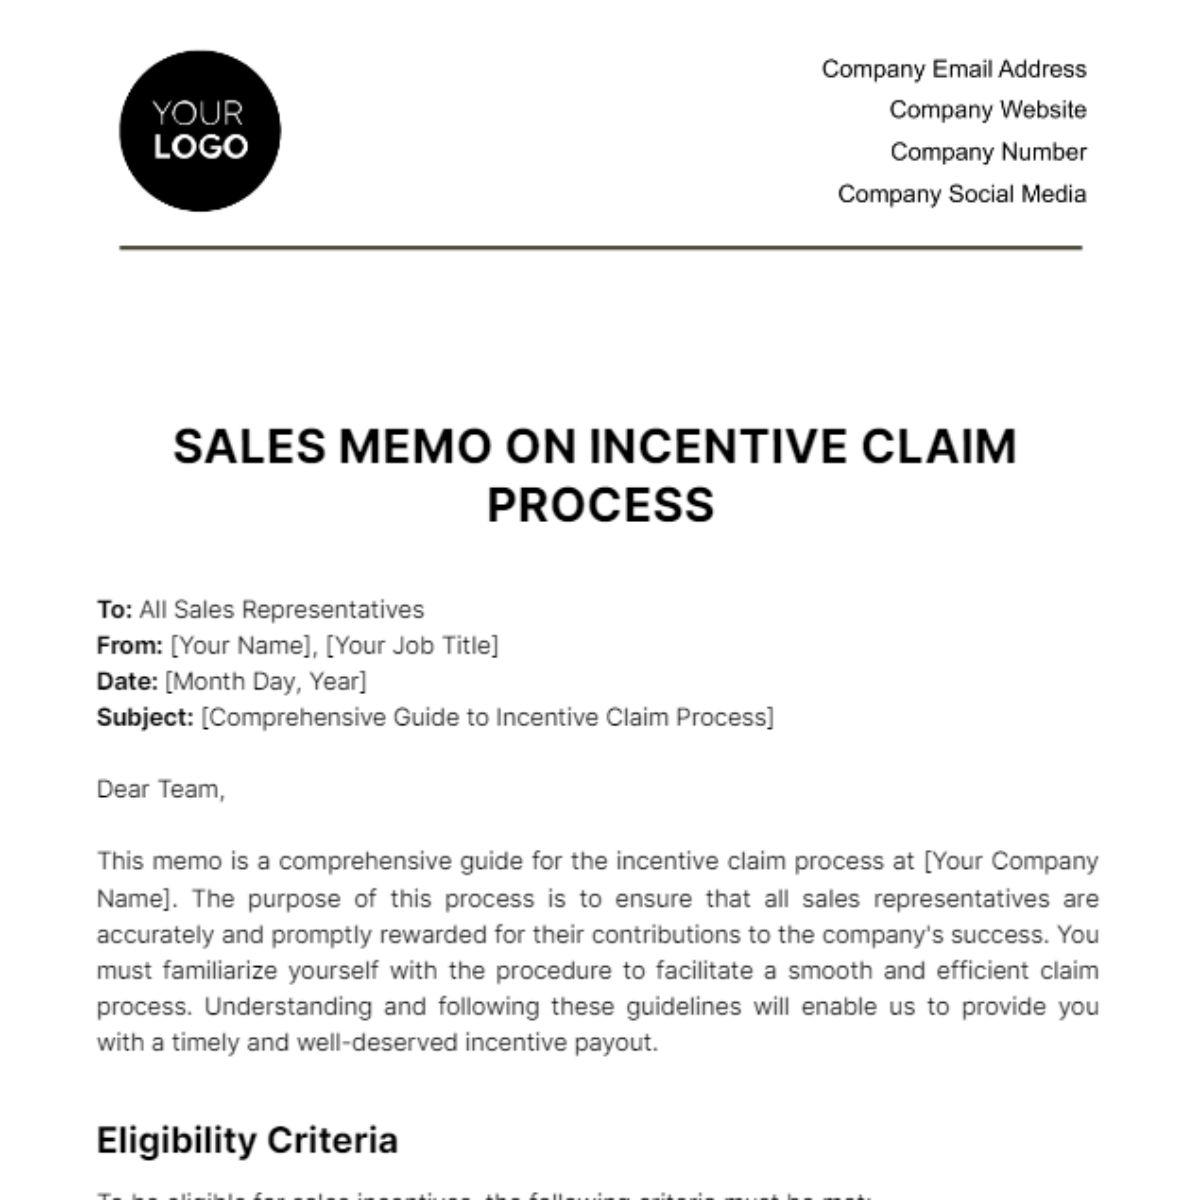 Sales Memo on Incentive Claim Process Template